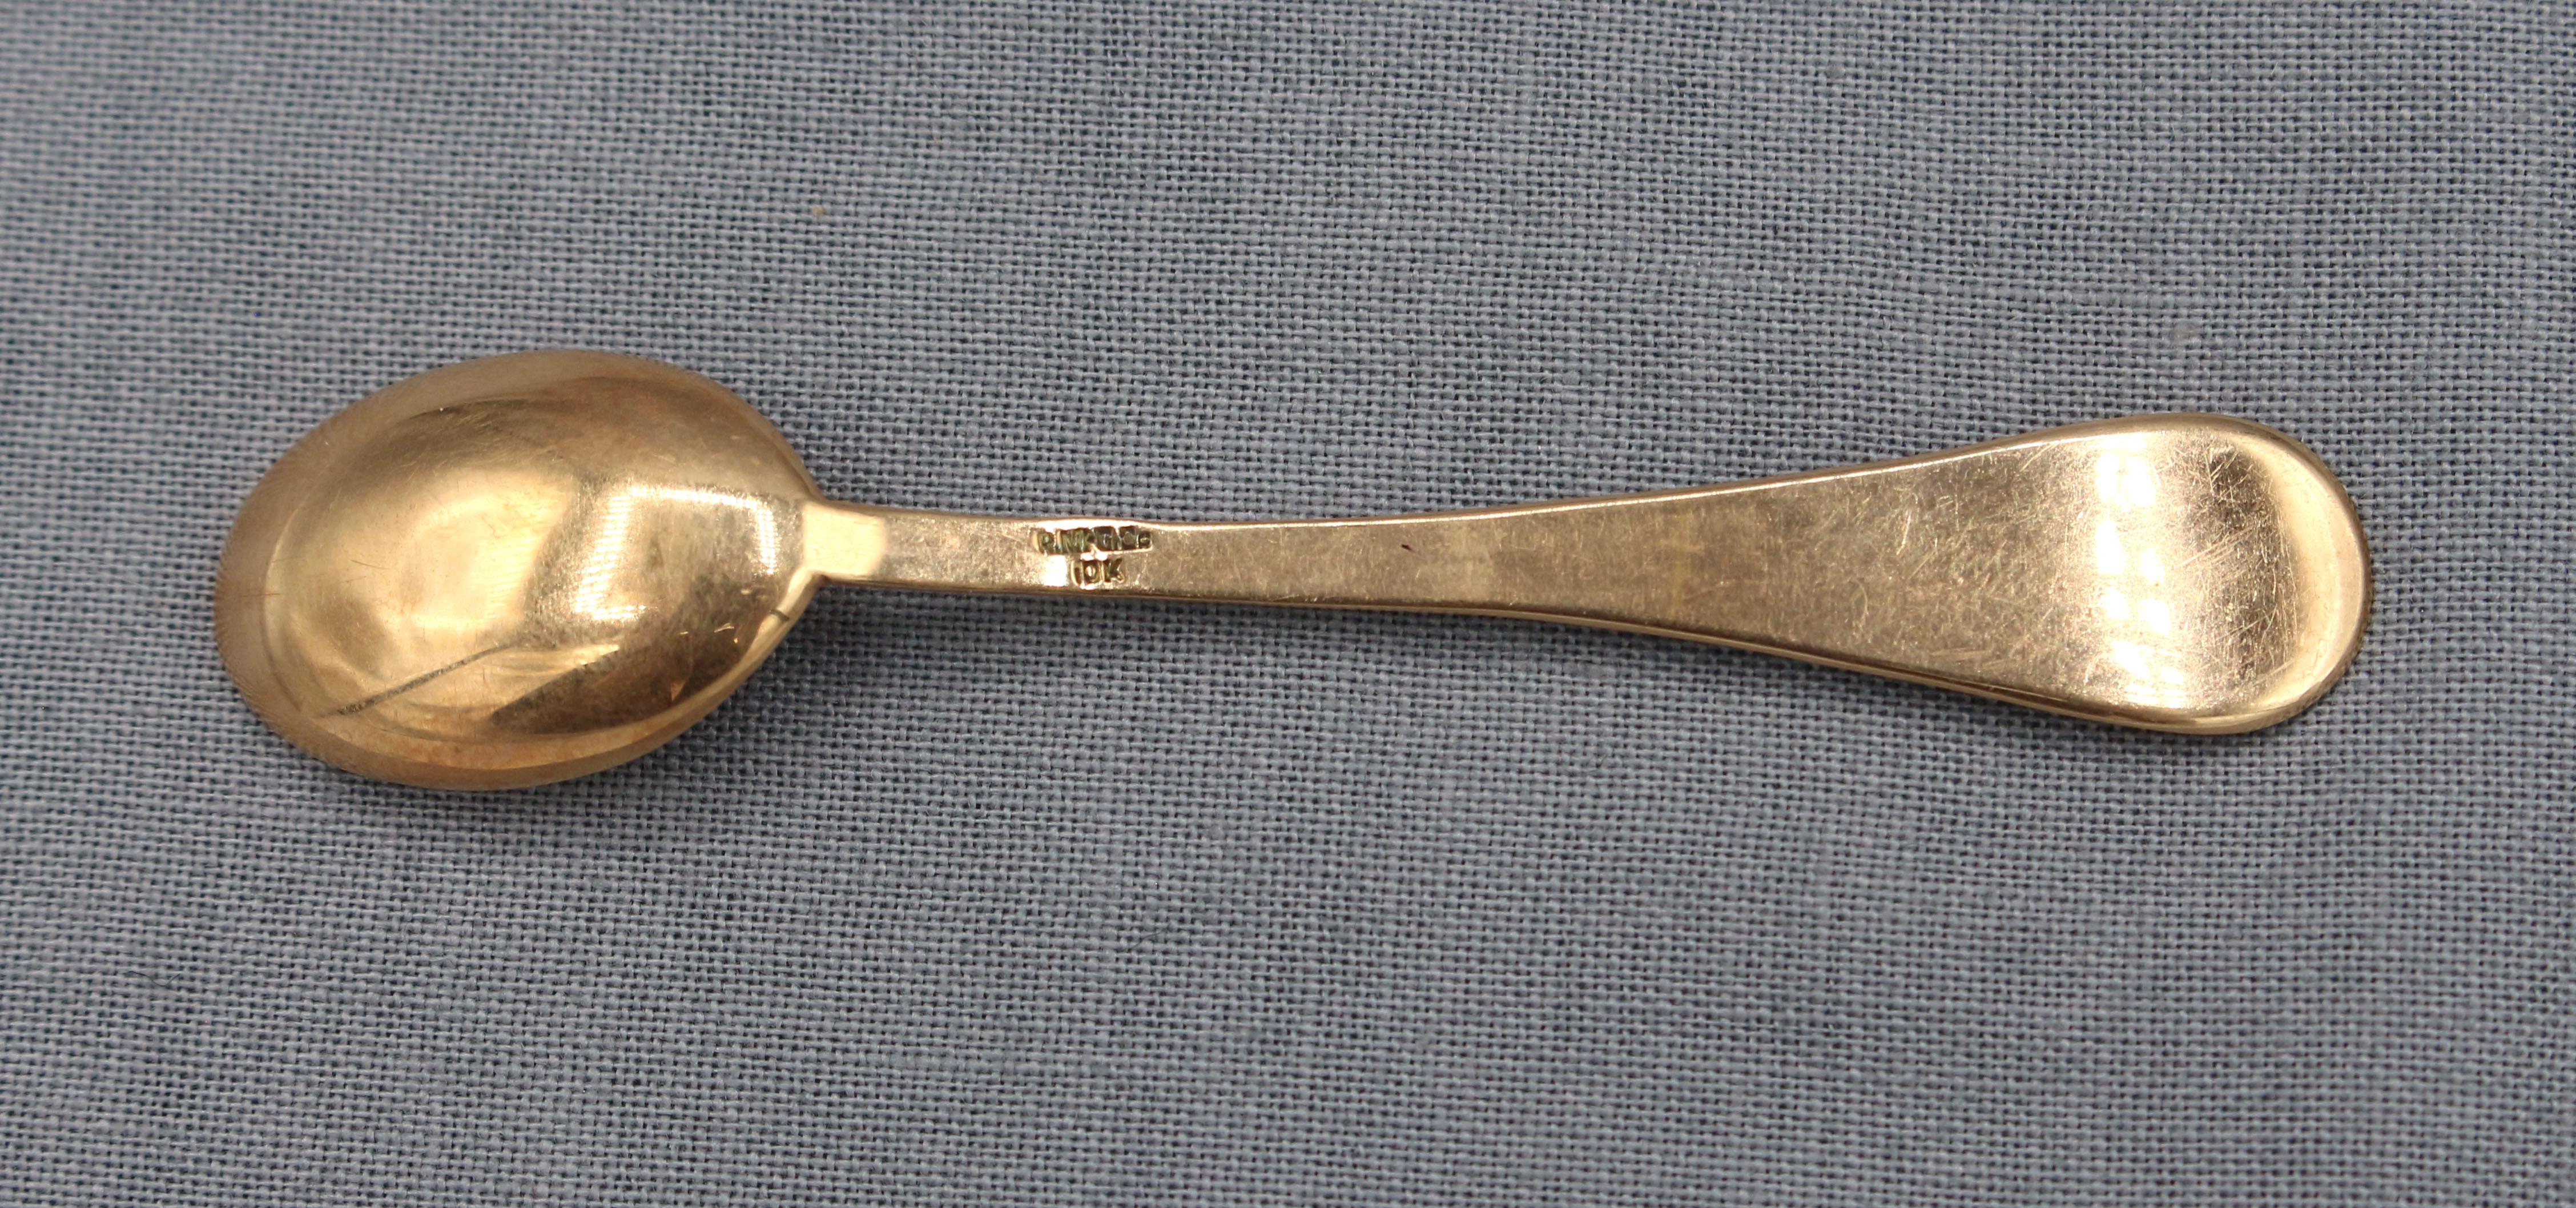 American 10k gold salt spoon, c.1890-1910. Bright cut decoration. Marked: RMG Co, 10k. 4 grams.
2 5/8